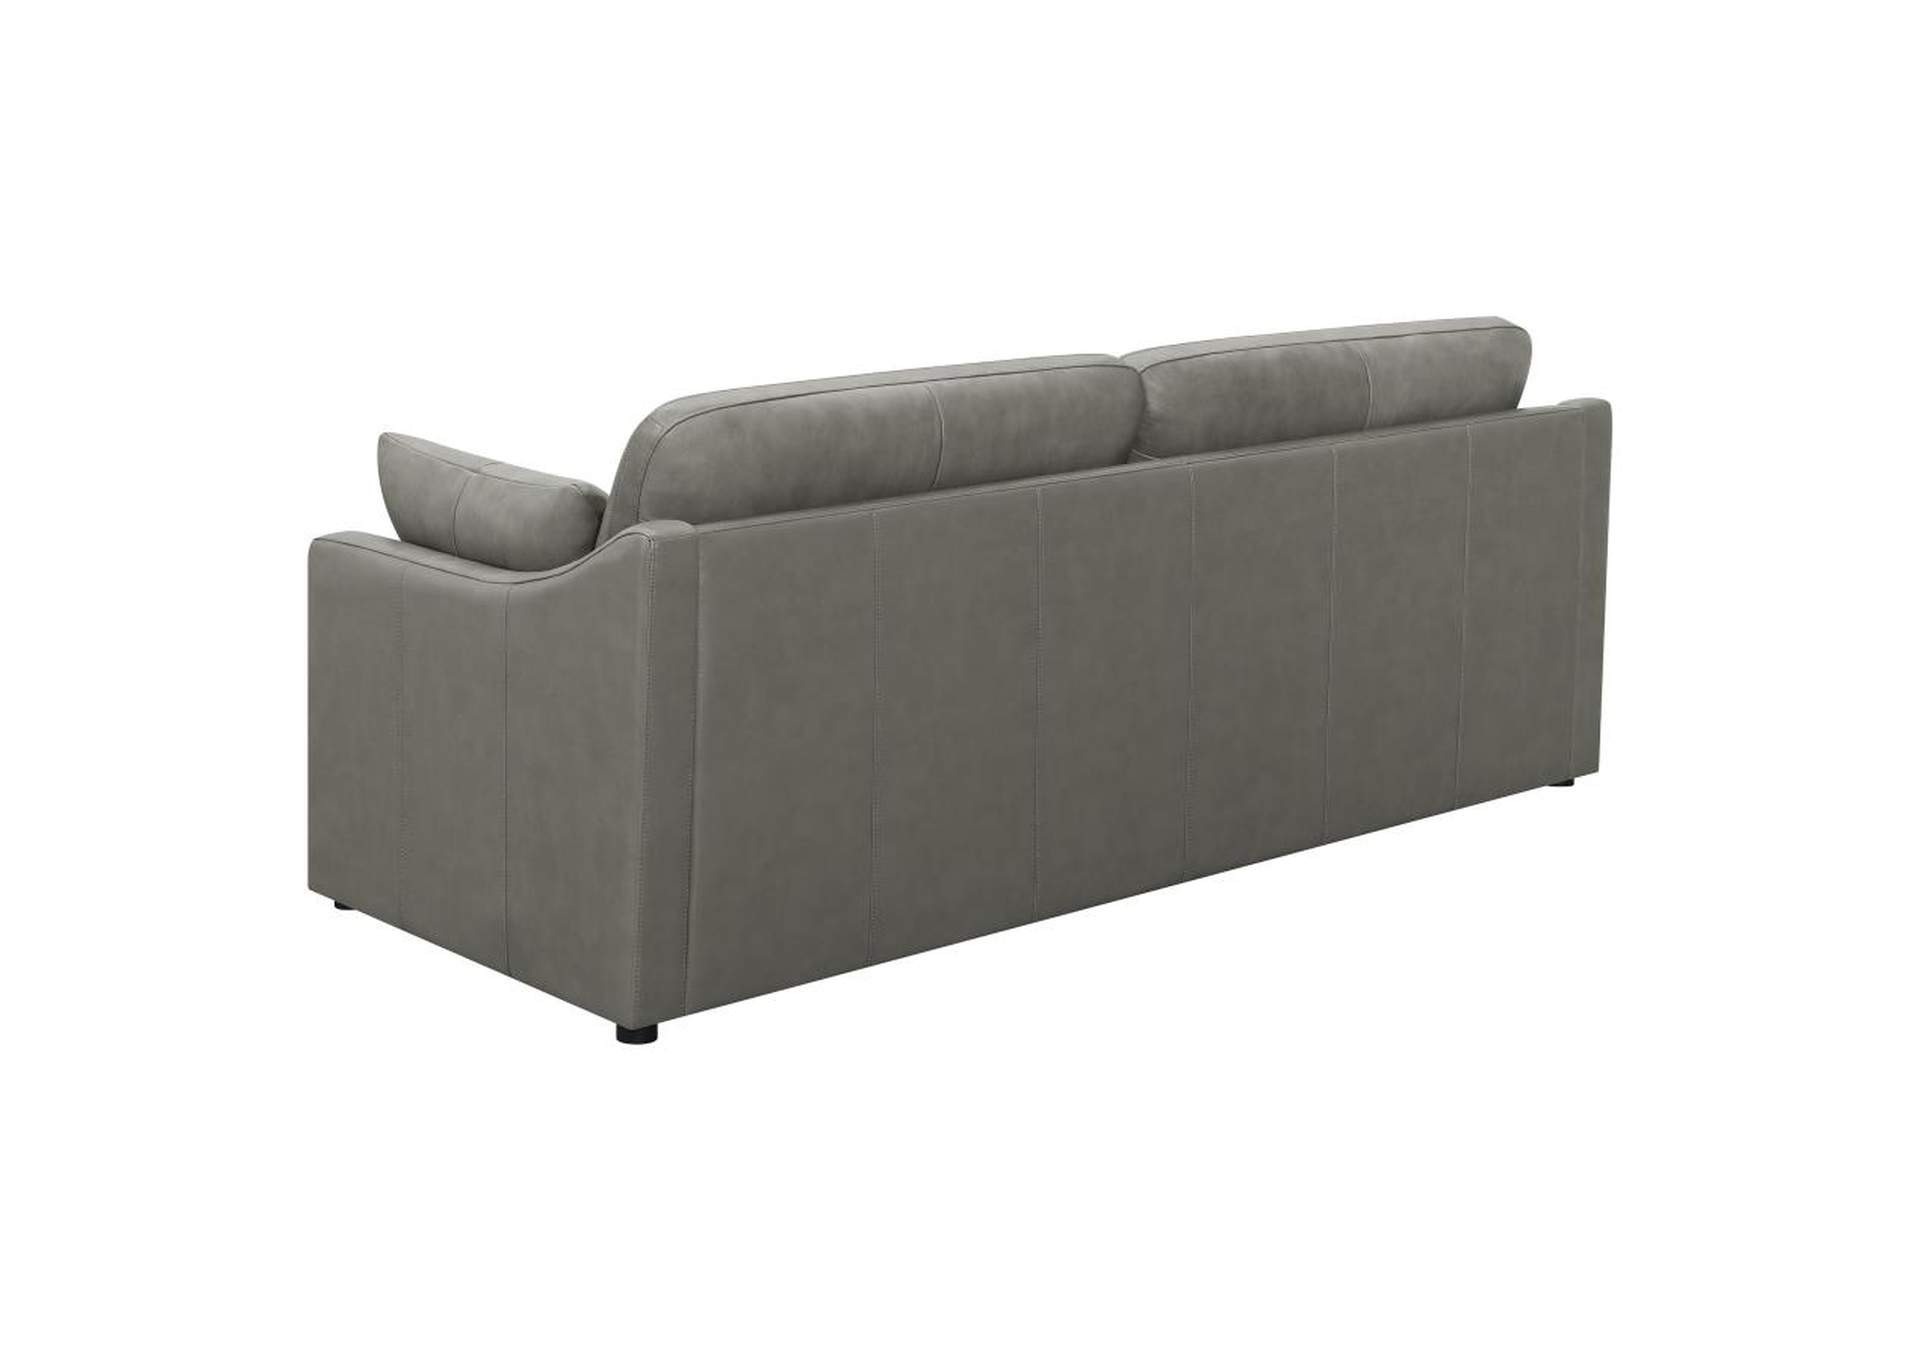 Grayson 3 - piece Sloped Arm Upholstered Living Room Set Grey,Coaster Furniture